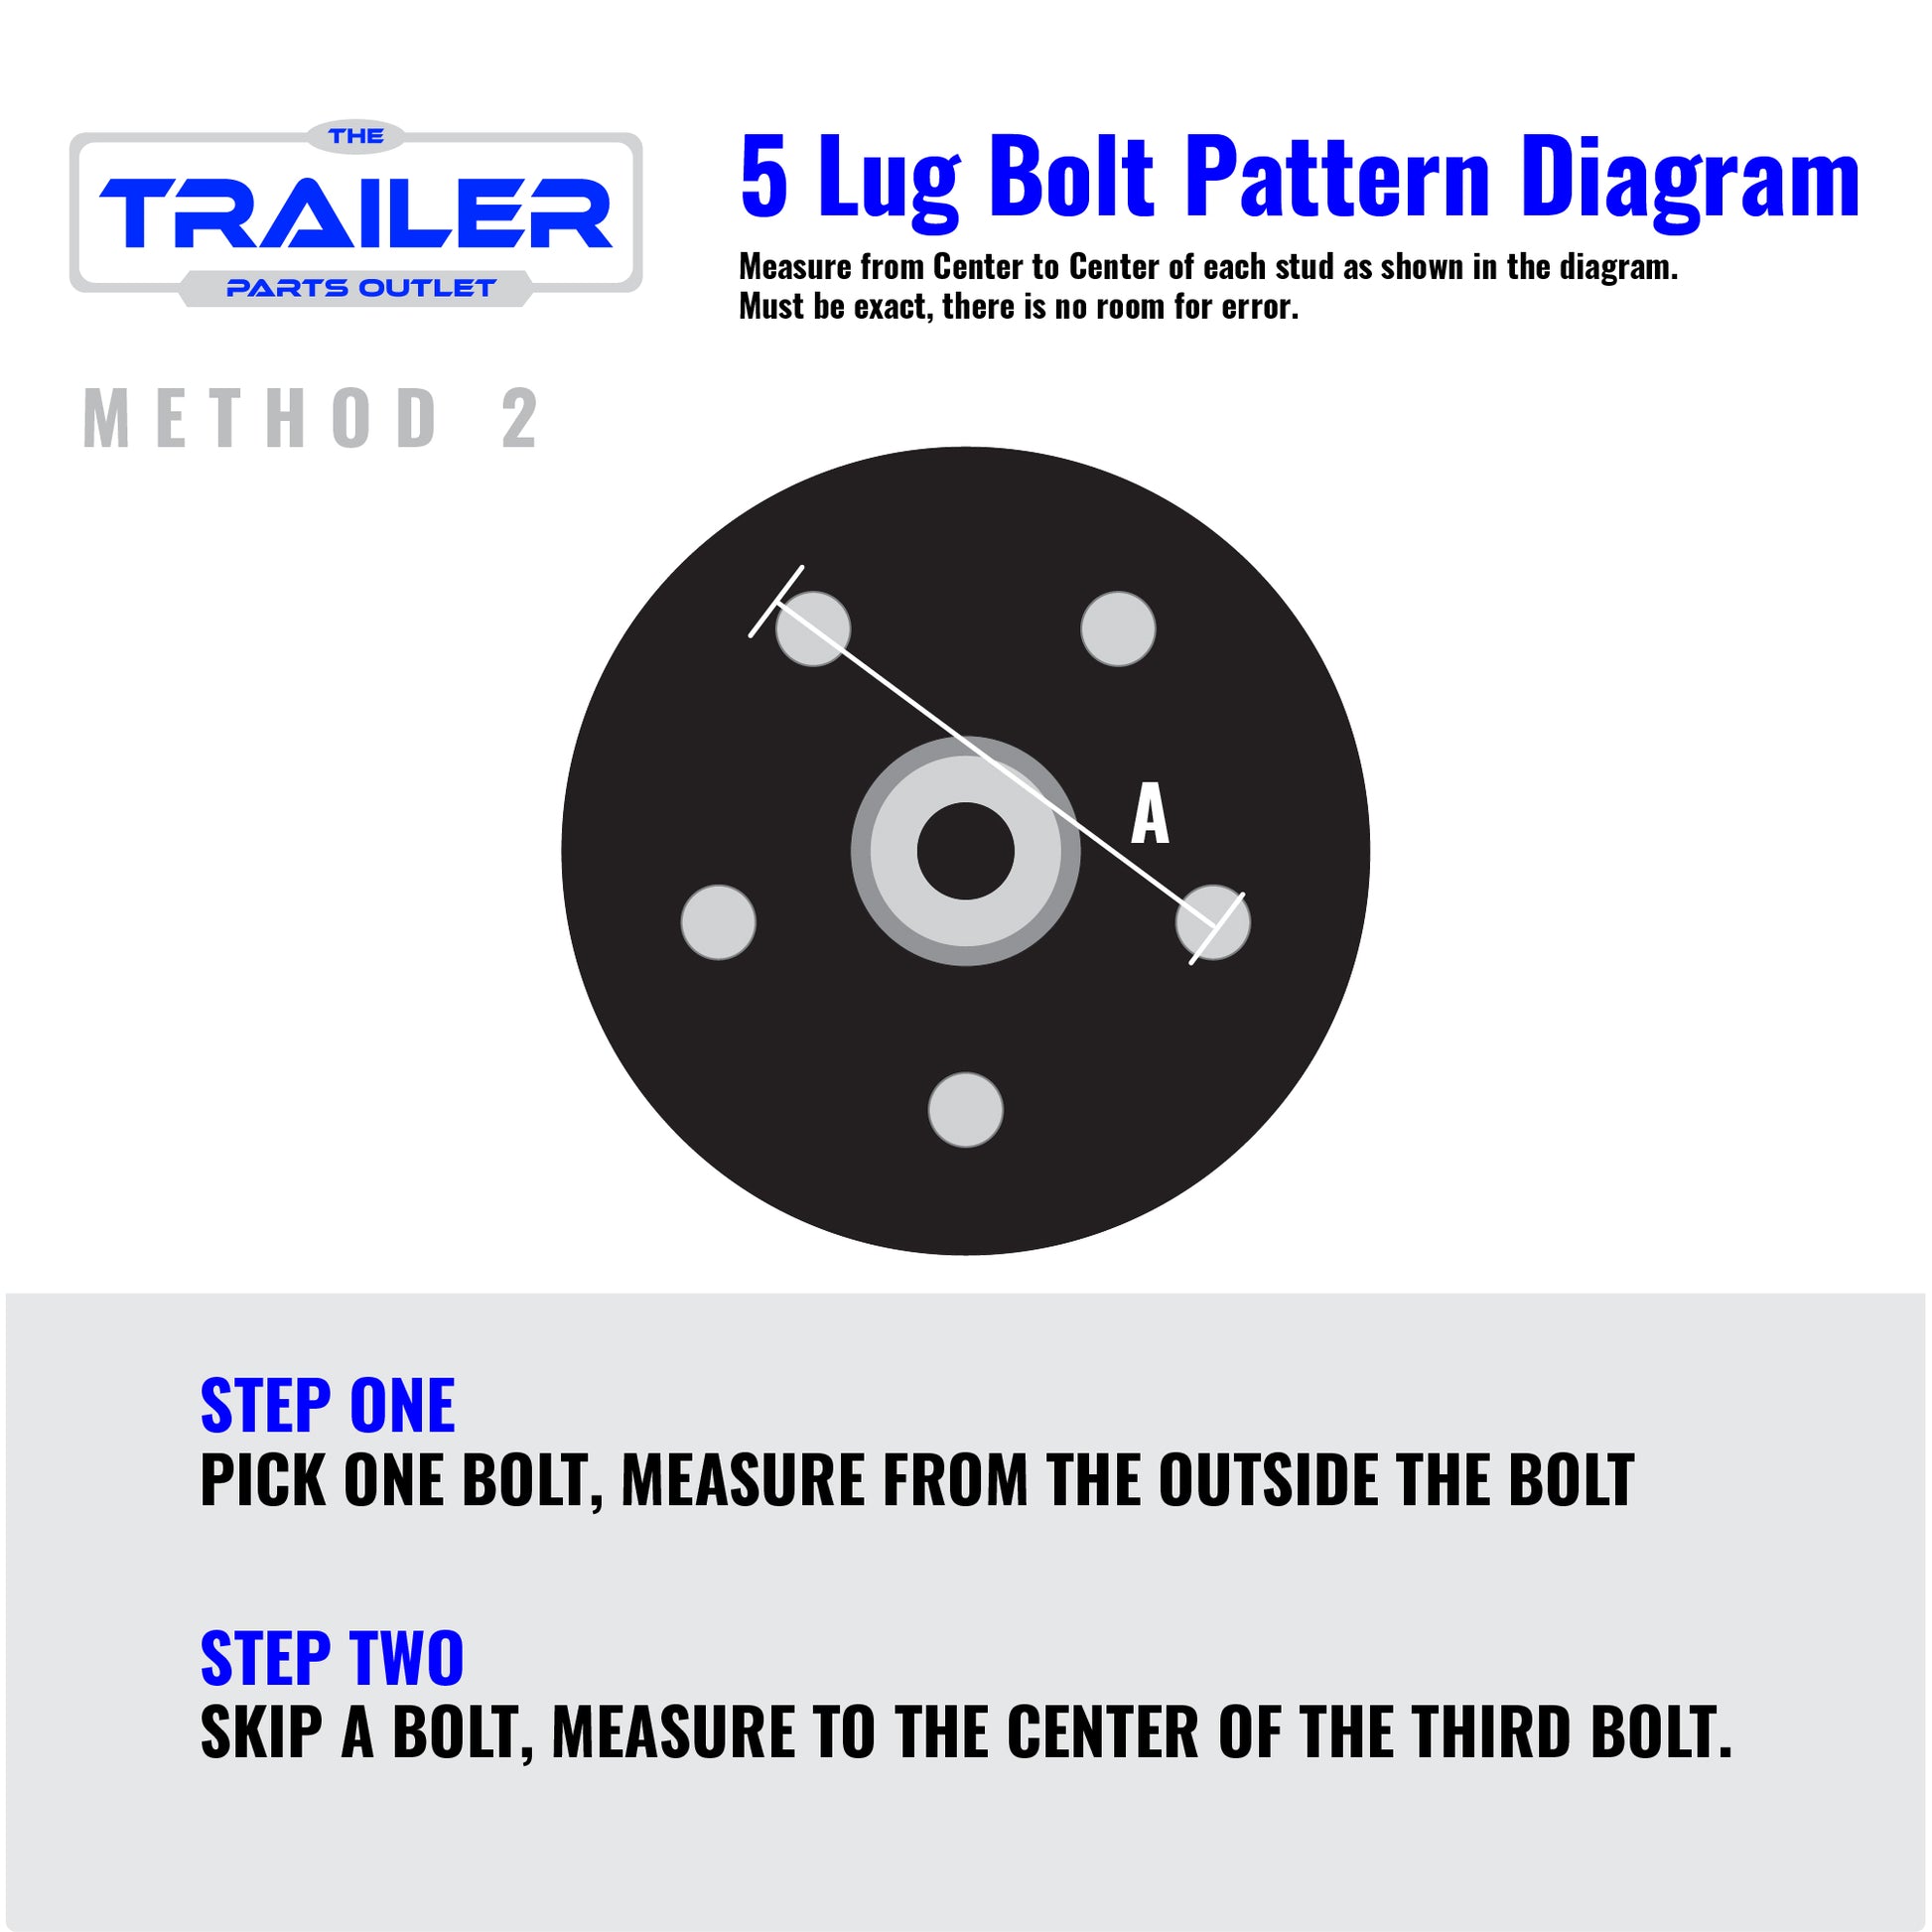 5 Lug Bolt Pattern Diagram Method 2